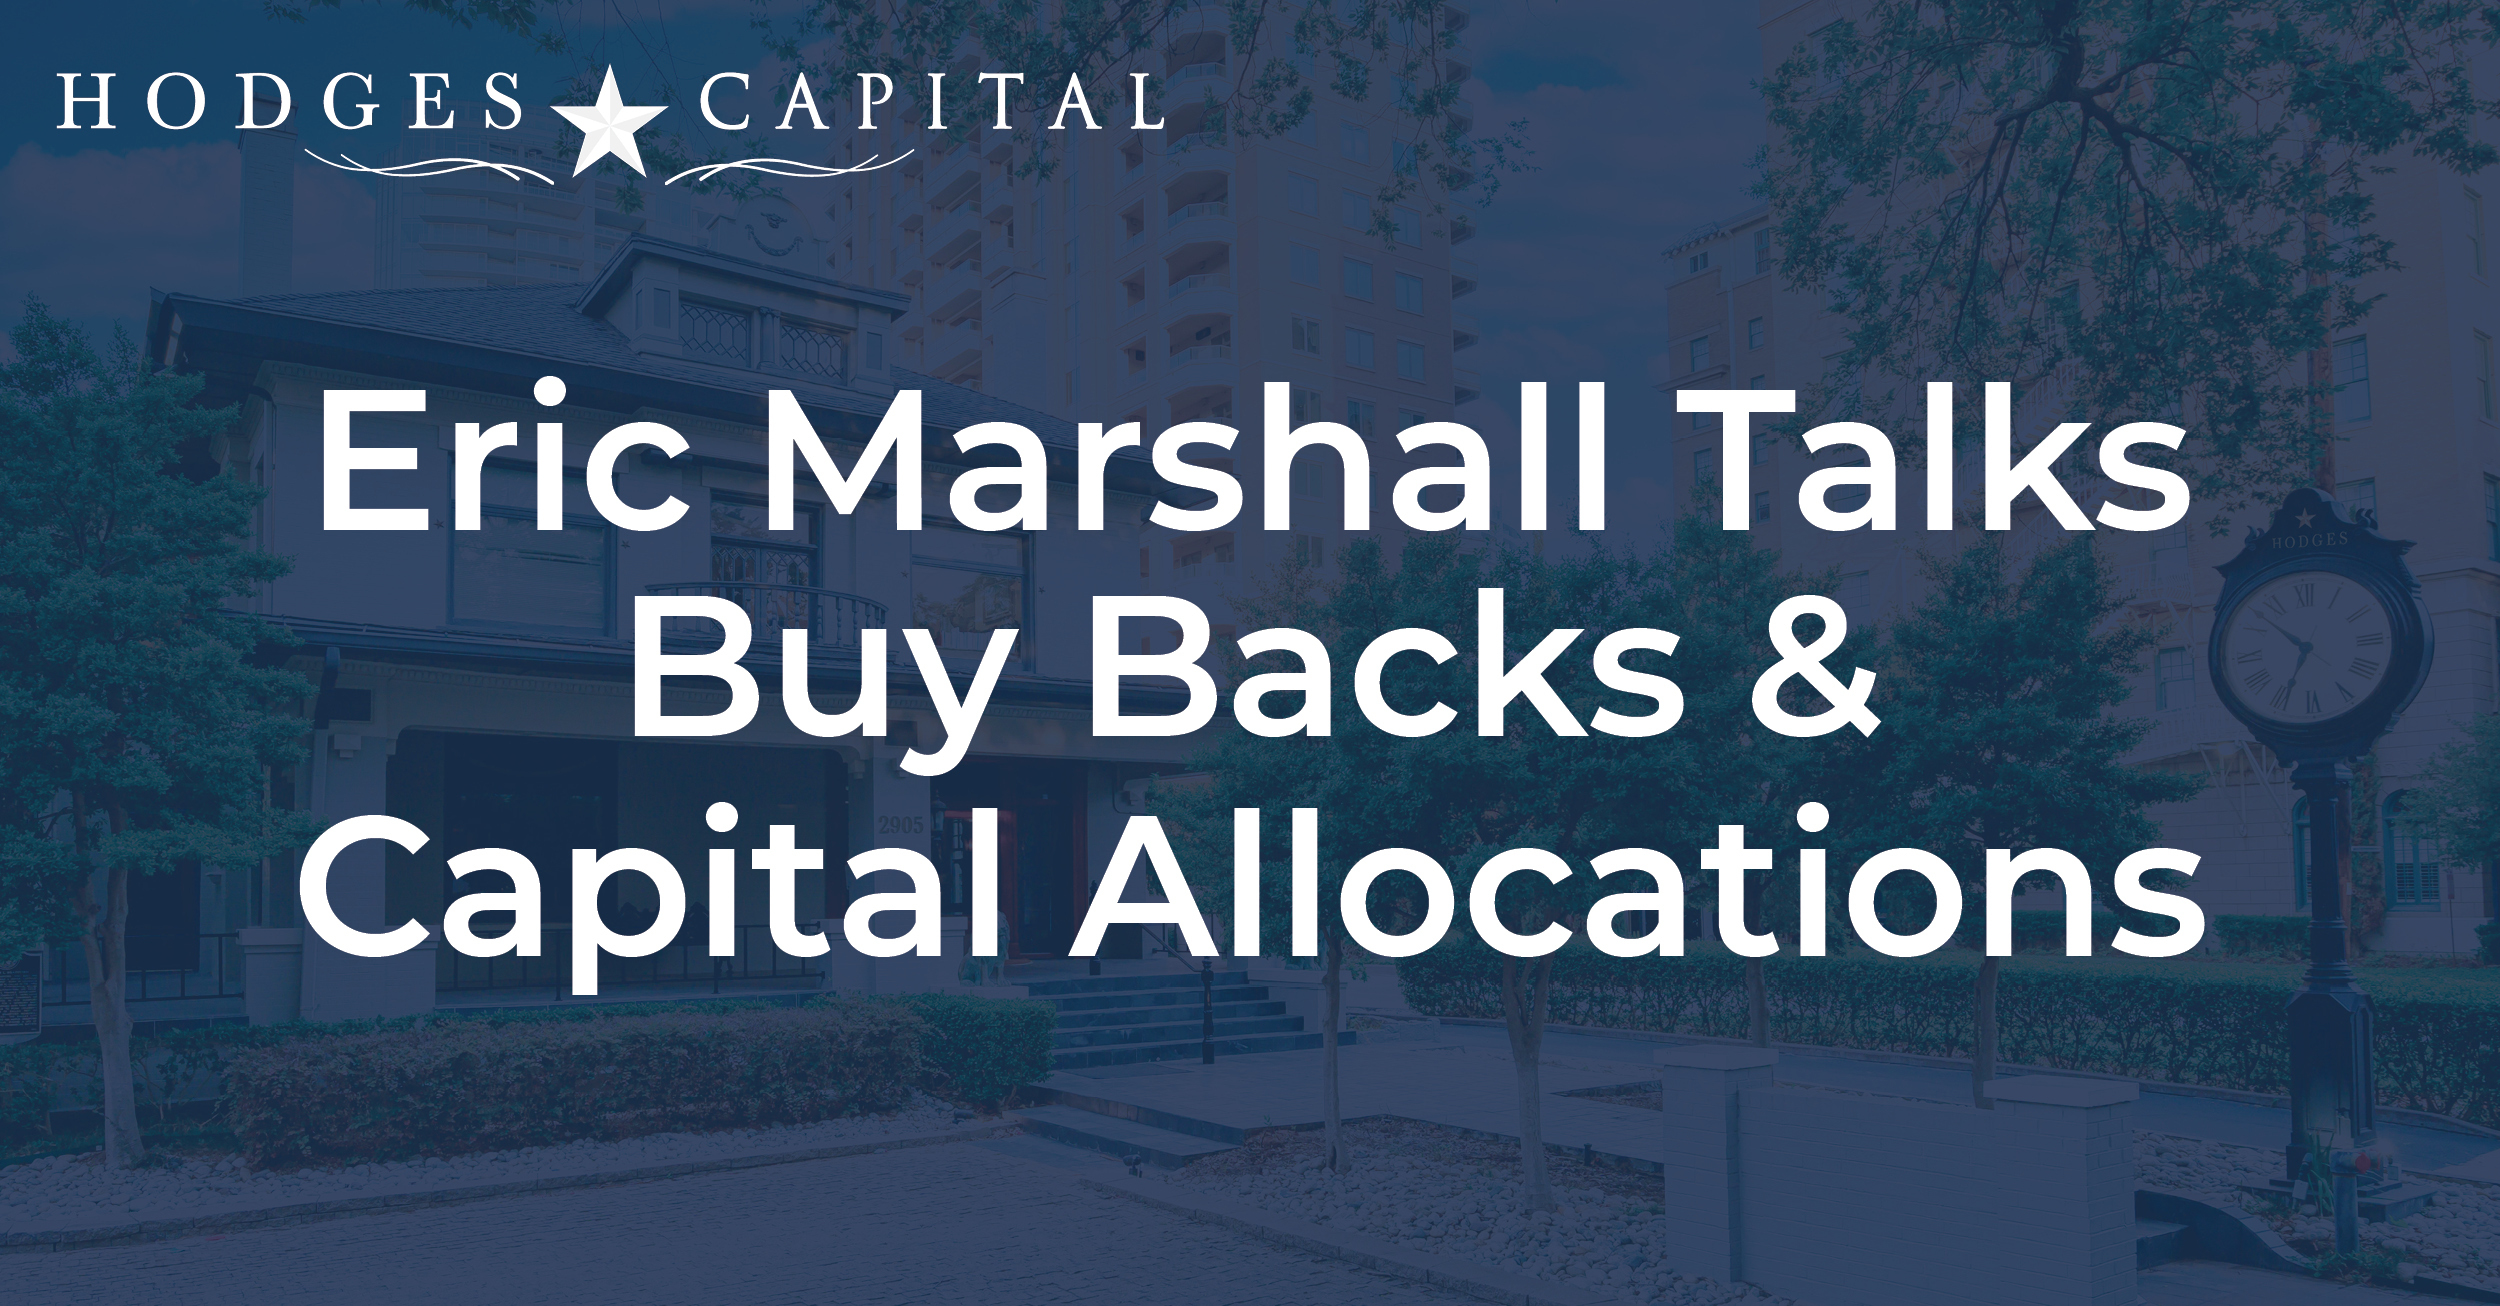 Eric Marshall Talks Buy Backs & Capital Allocations